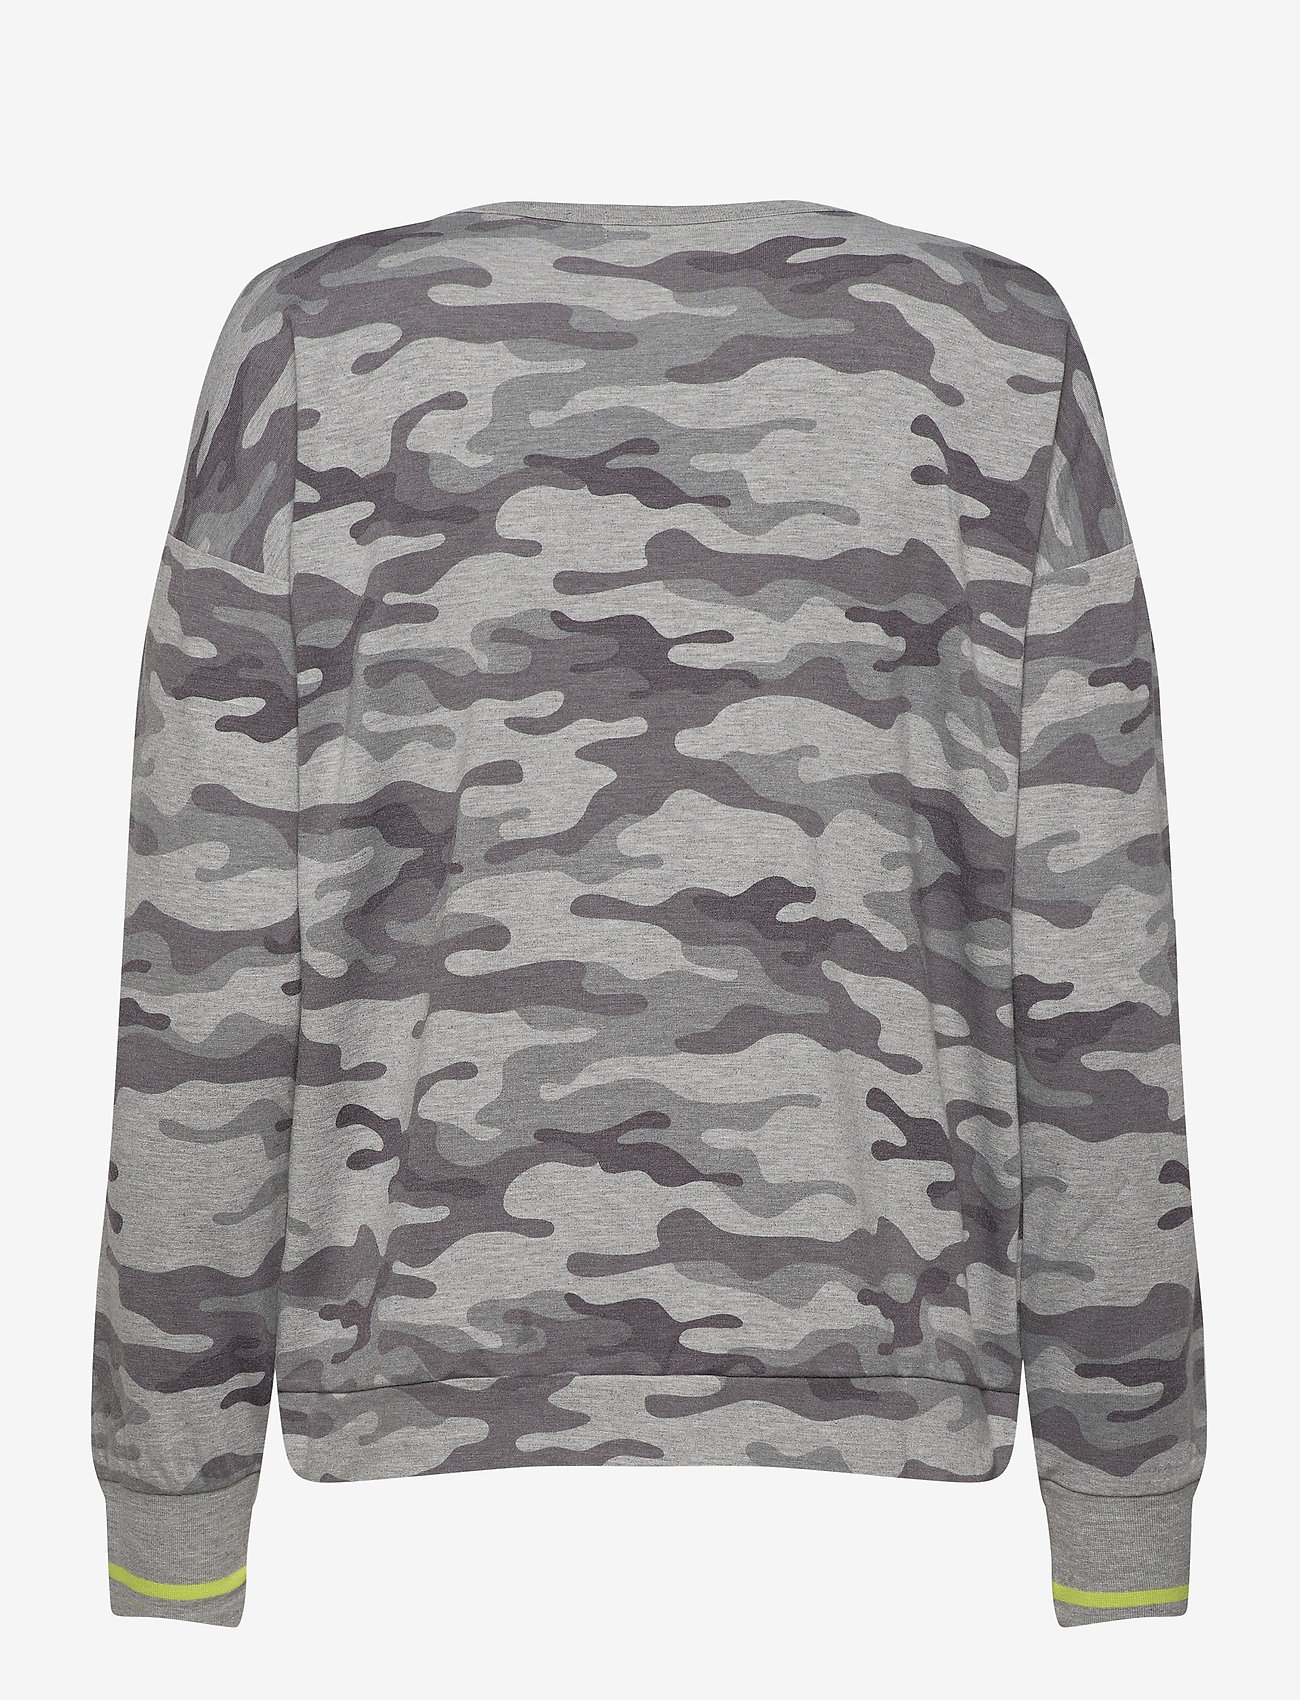 PJ Salvage - l/s shirt - Överdelar - grey - 1